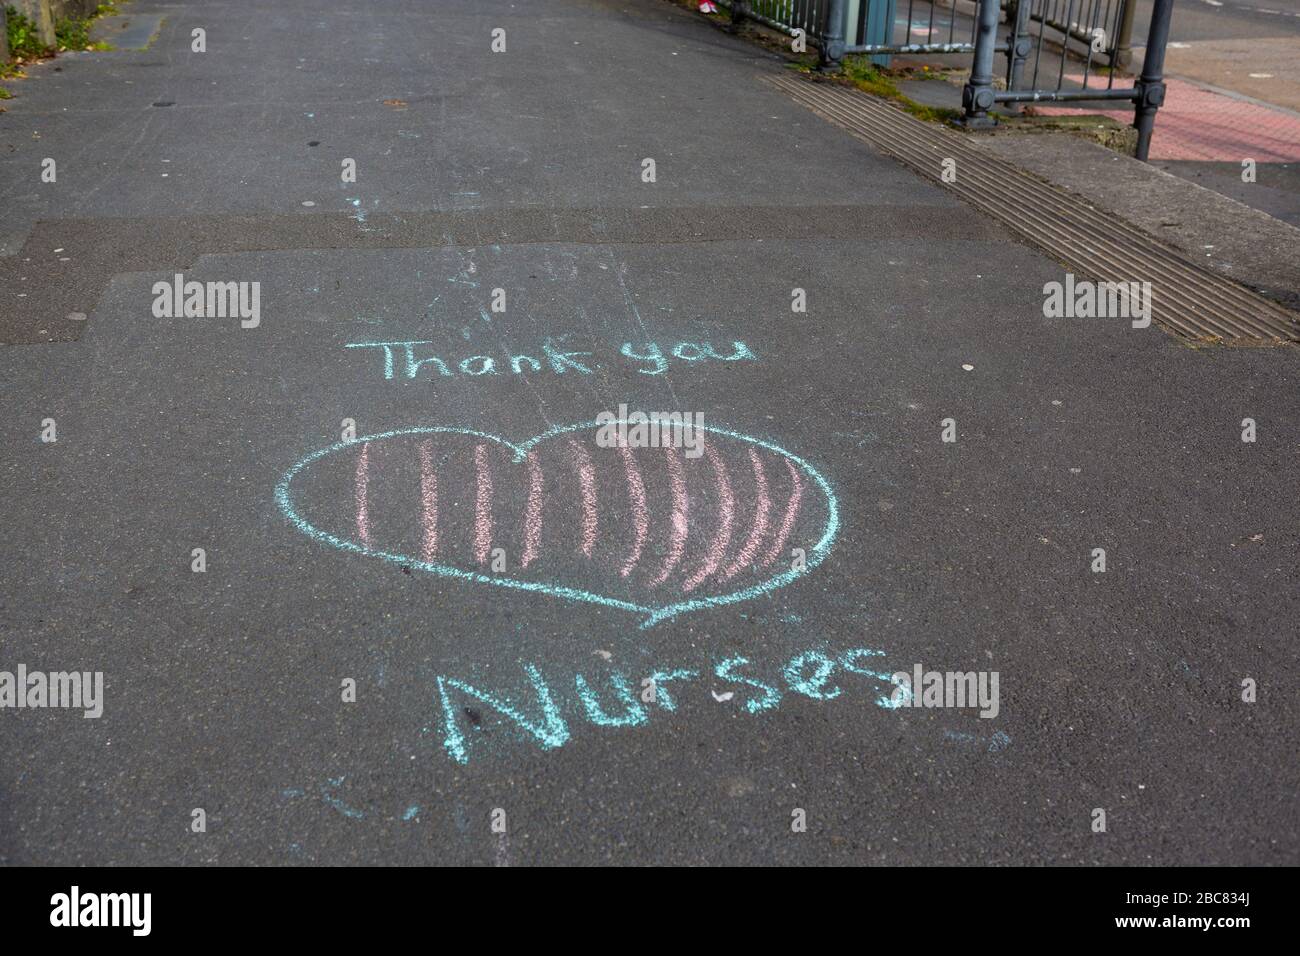 Carmarthen, UK. 3 April, 2020. Child's chalk graffiti on pavement saying Thank You Nurses as part of Clap for Carers initiative during Coronavirus pandemic lockdown in Wales, UK. Credit: Gruffydd Ll. Thomas/Alamy Live News Stock Photo